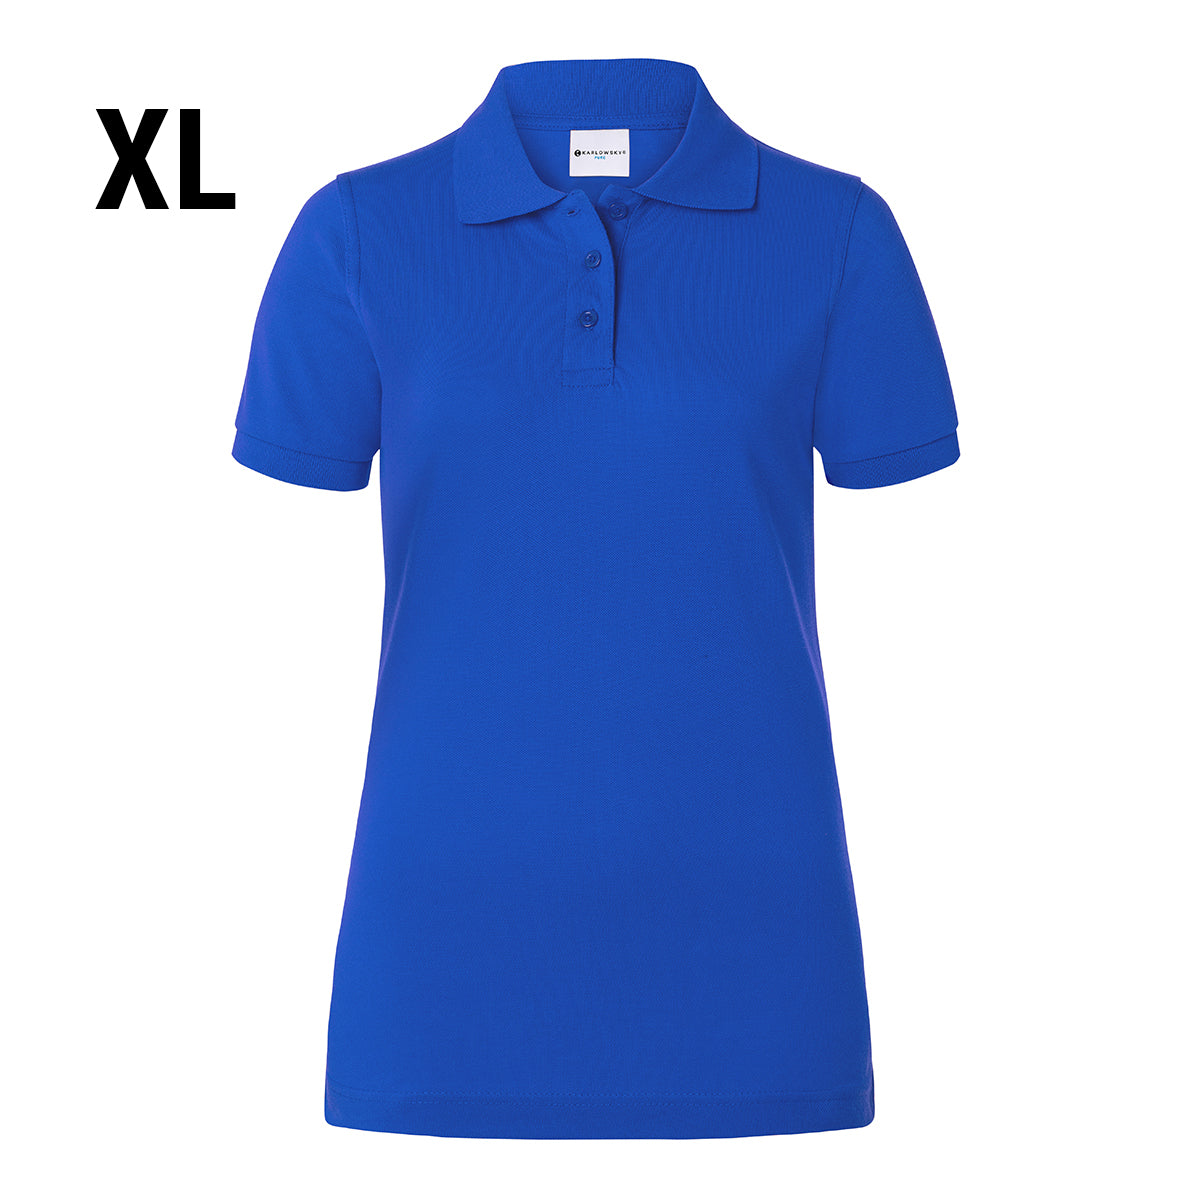 Karlowsky - Arbejdsbeklædning Basic Poloshirt til damer - Blå - Størrelse: XL